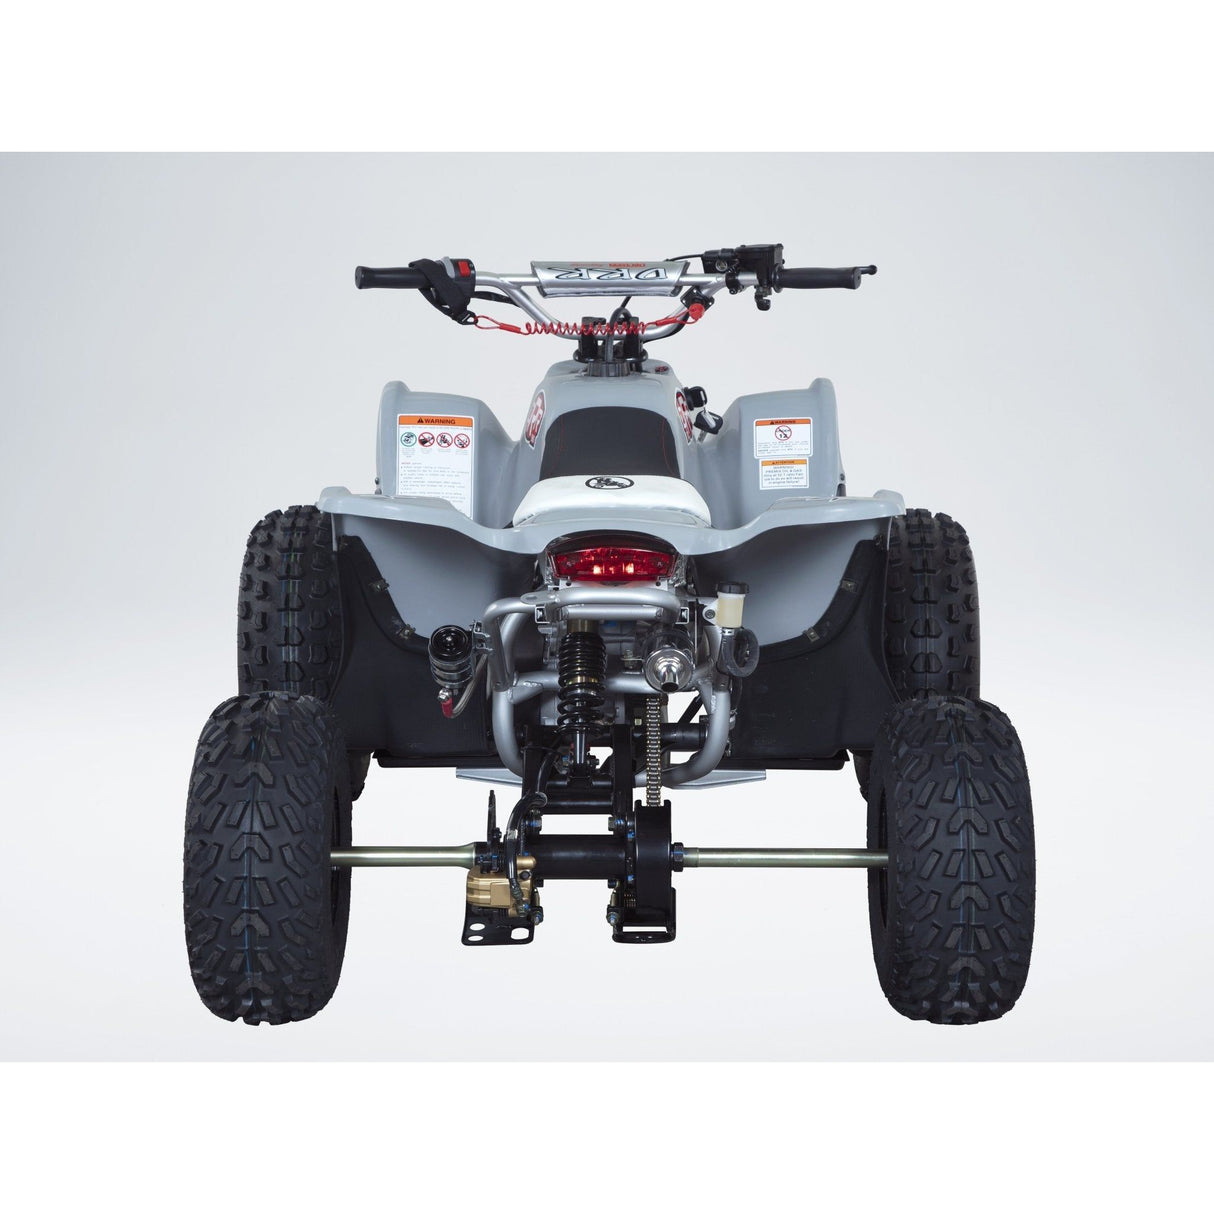 2020 DRR DRX 90cc ATV - G-FORCE POWERSPORTS